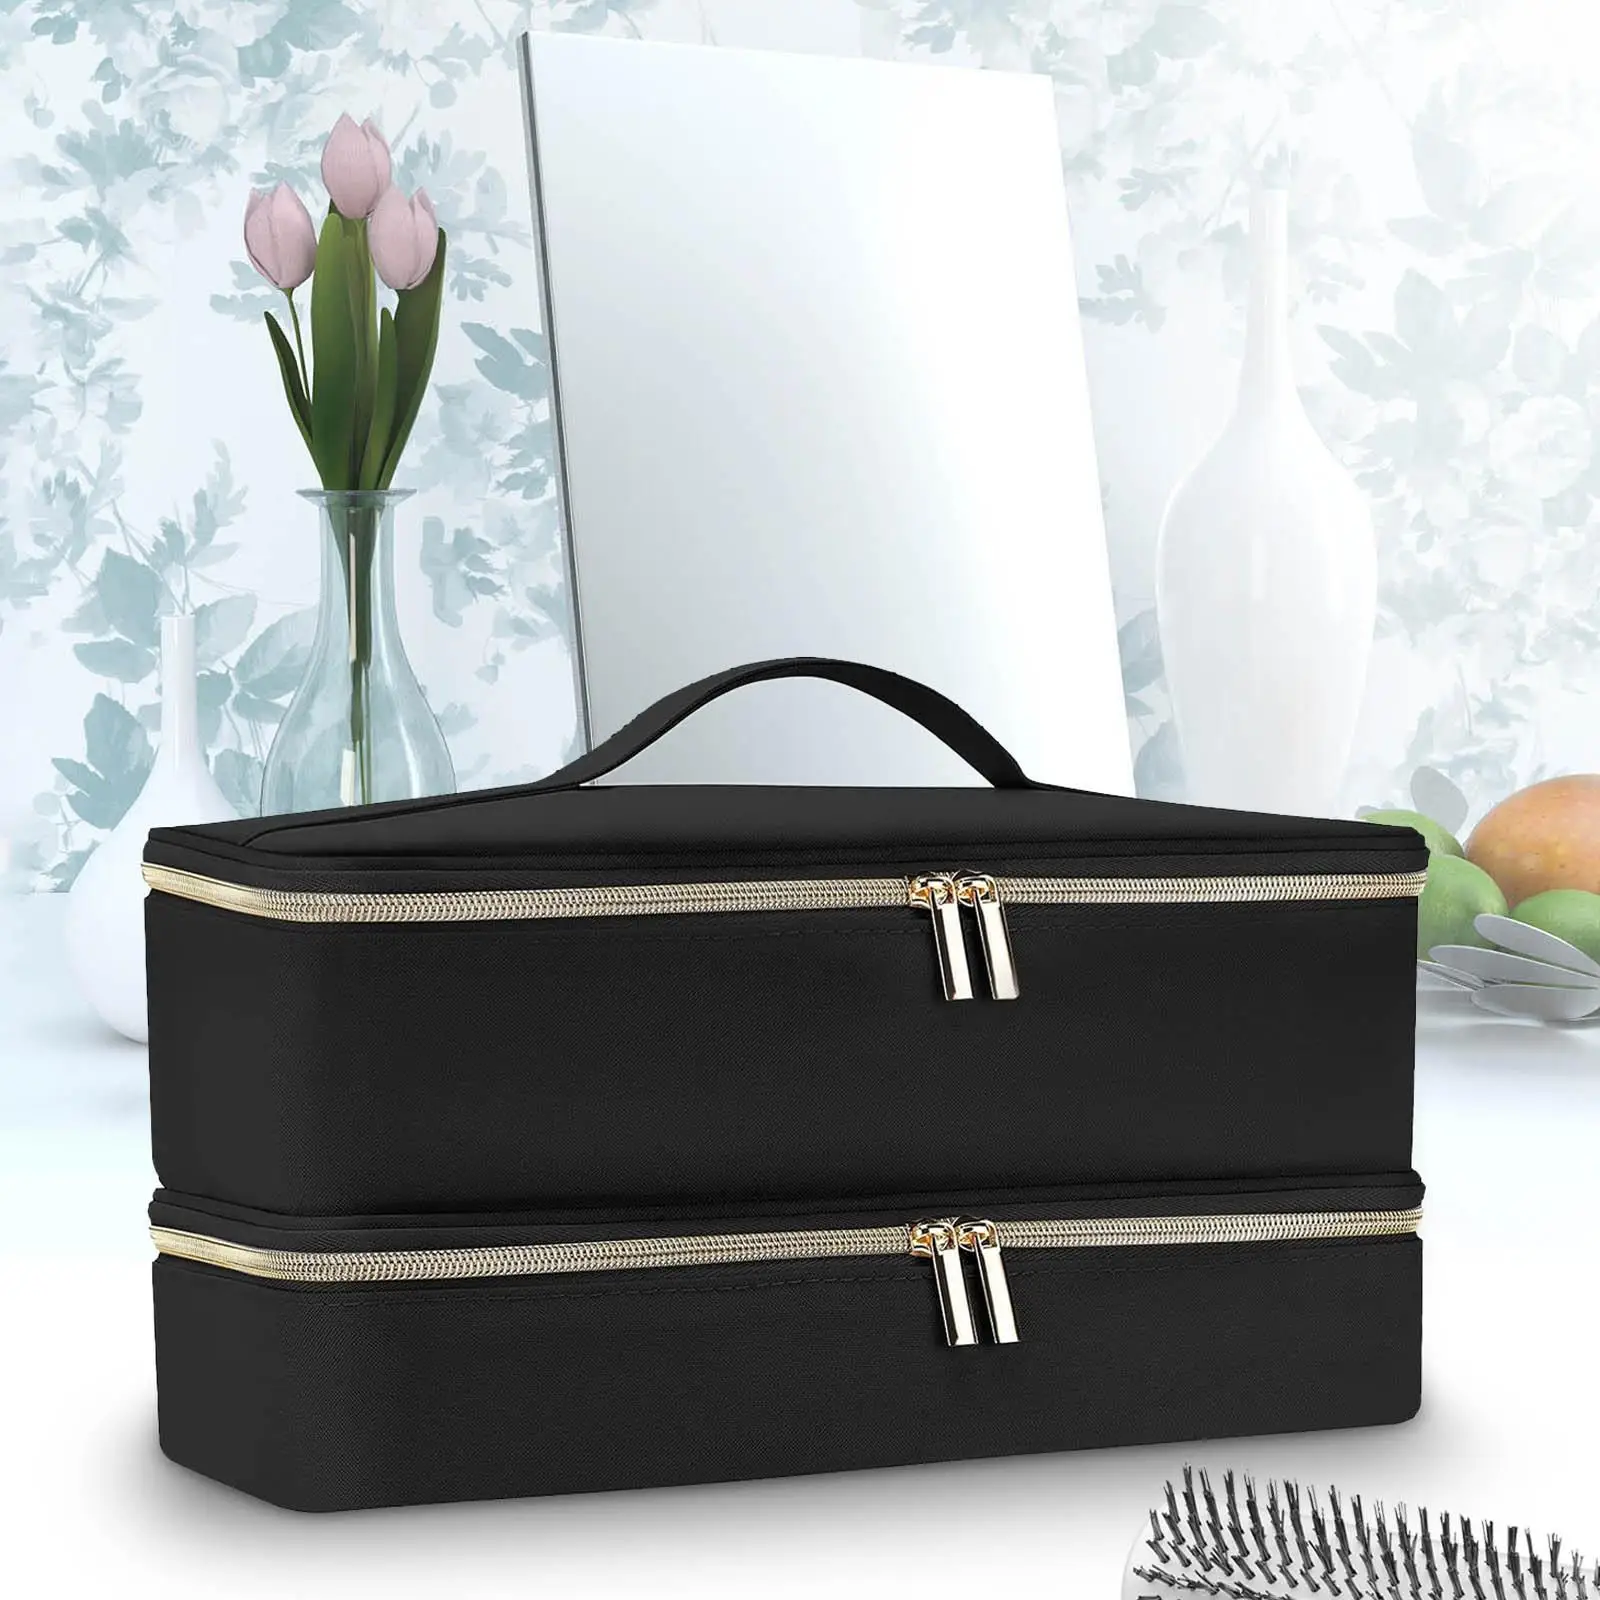 Hair Dryer Bags Hair Curler Organizer Bag Portable Toiletry Bag Multipurpose Travel Case for Business Trip Home Travel Bathroom